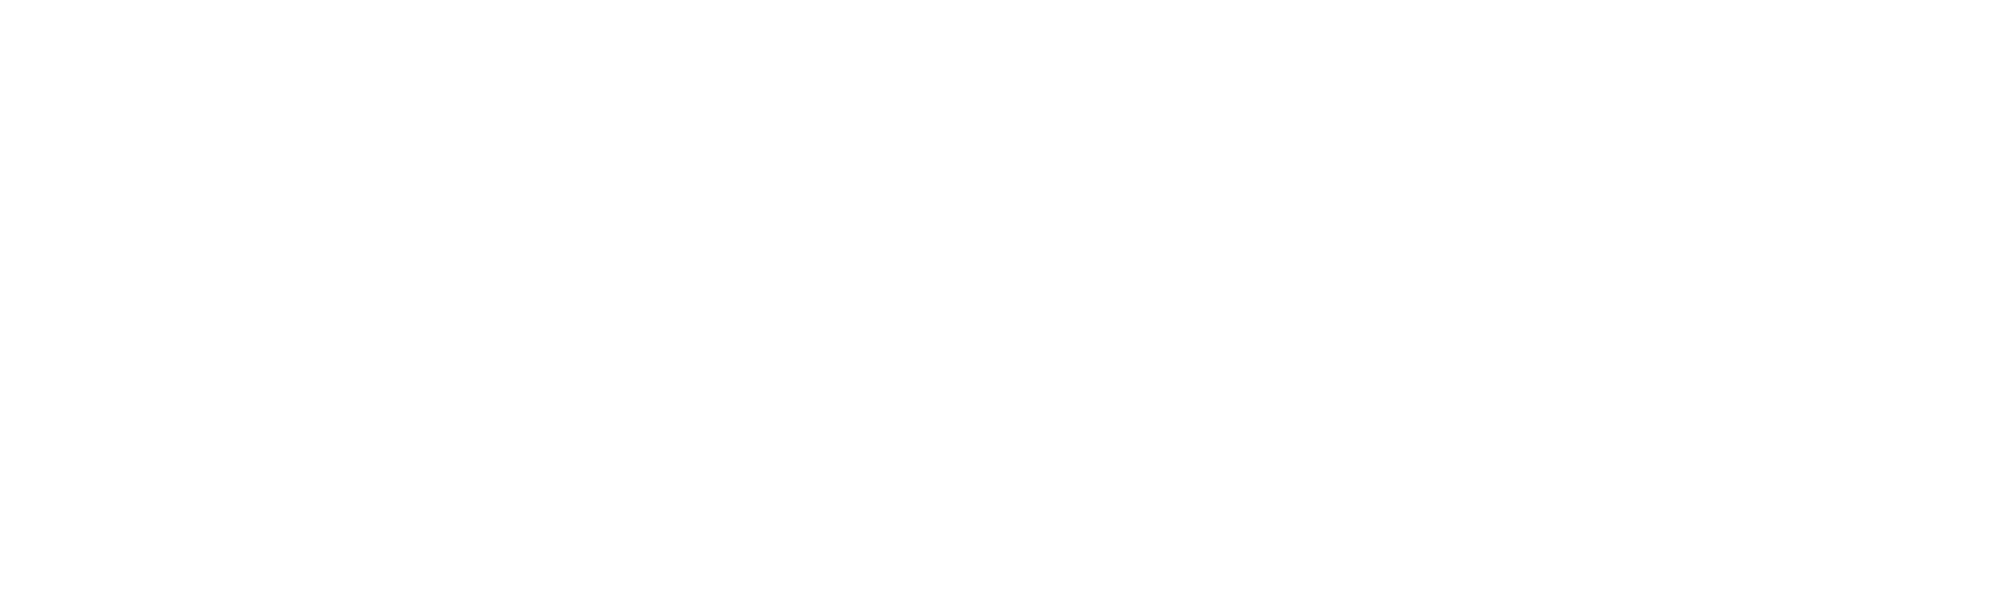 All Nations Kansas City